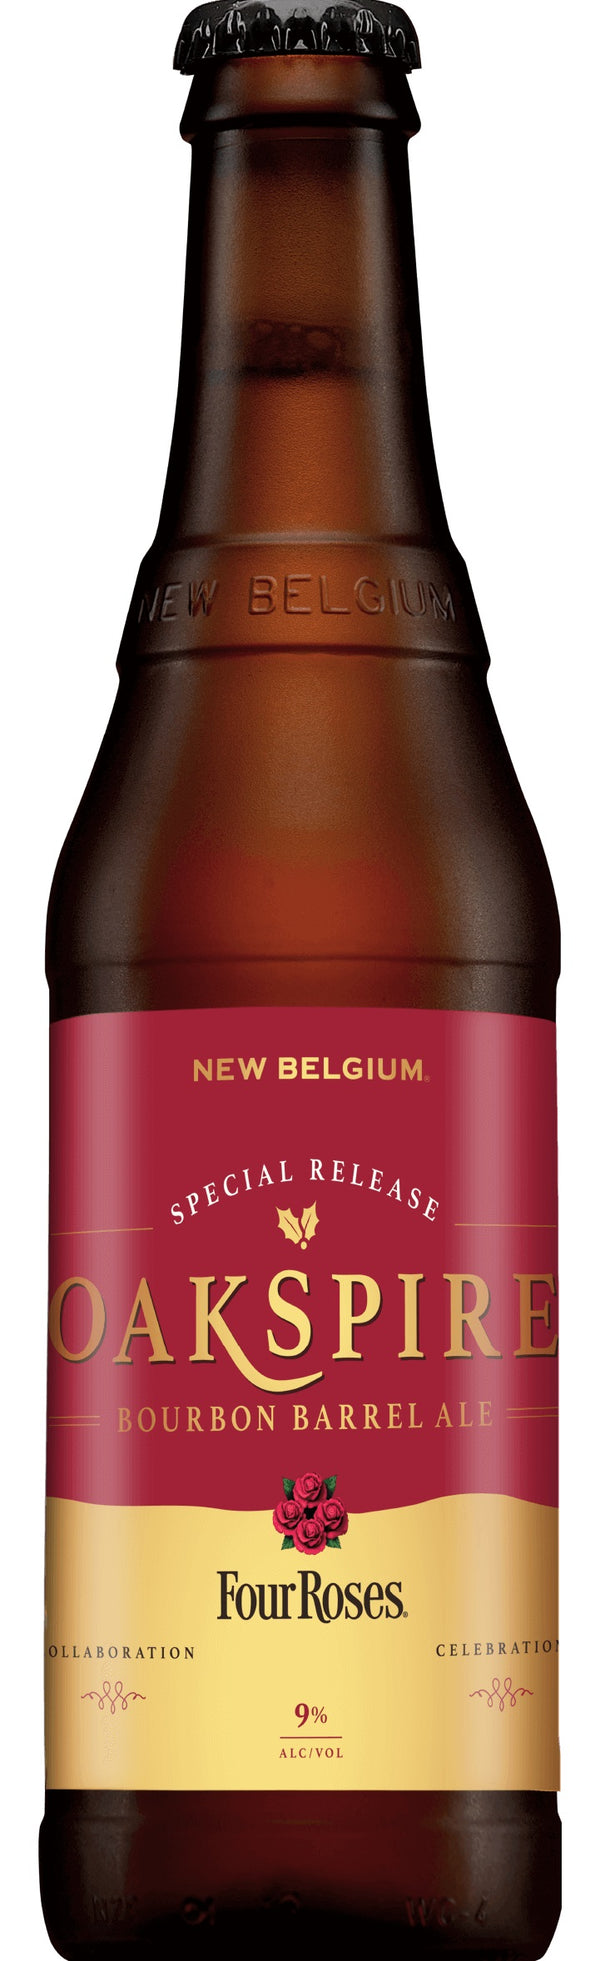 New Belgium Oakspire Bourbon Barrel Ale 355ml